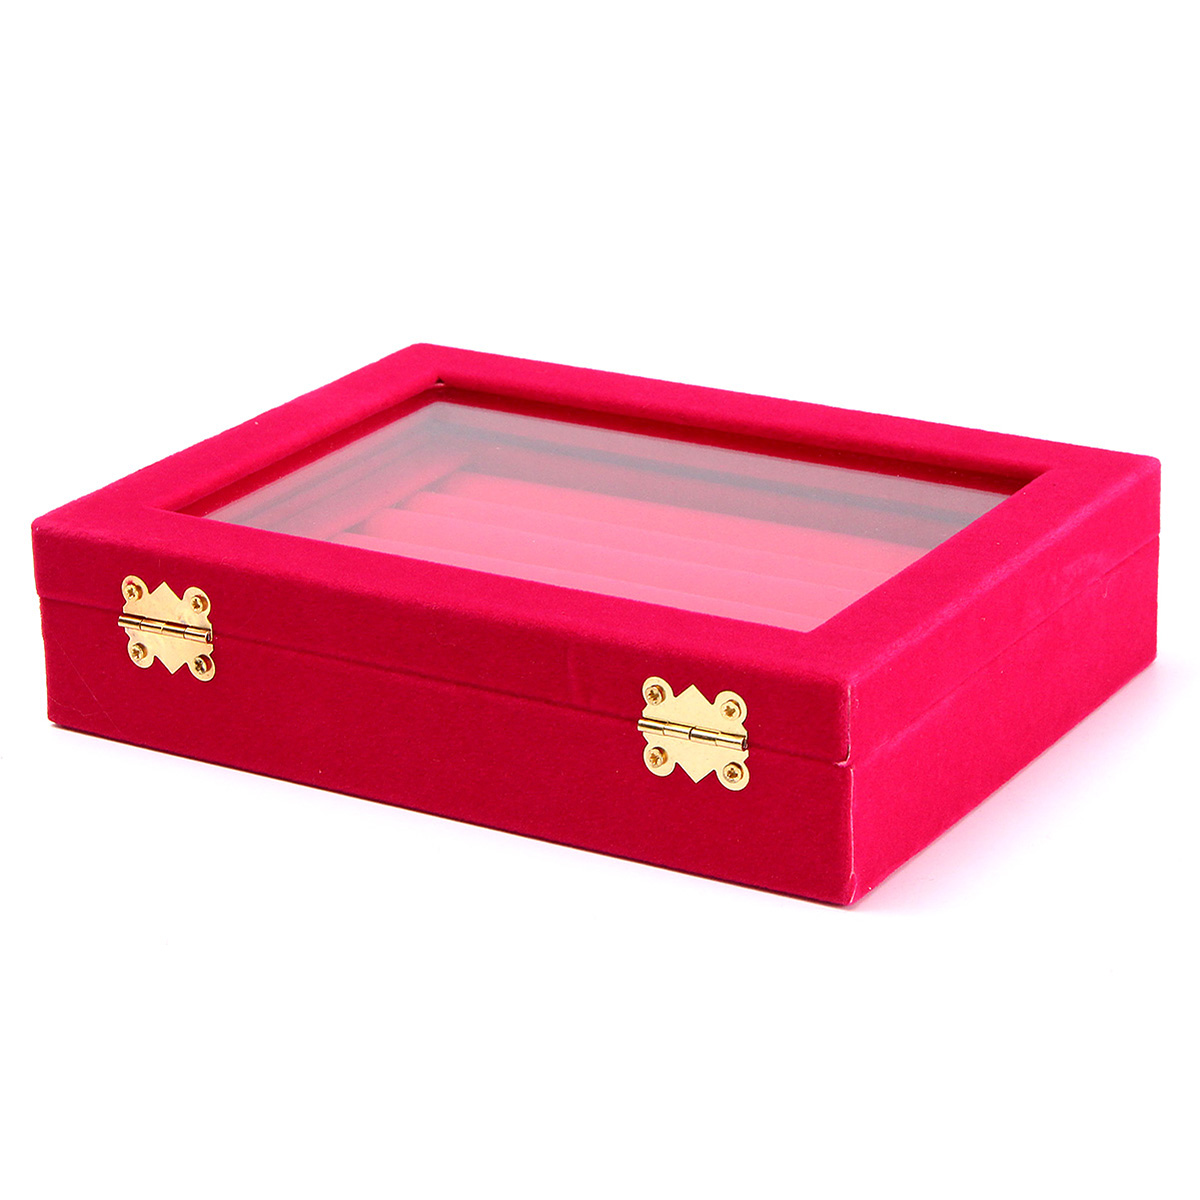 Jewelry-Velvet-Wood-Ring-Display-Organizer-Case-Tray-Holder-Earring-Storage-Box-1221119-8